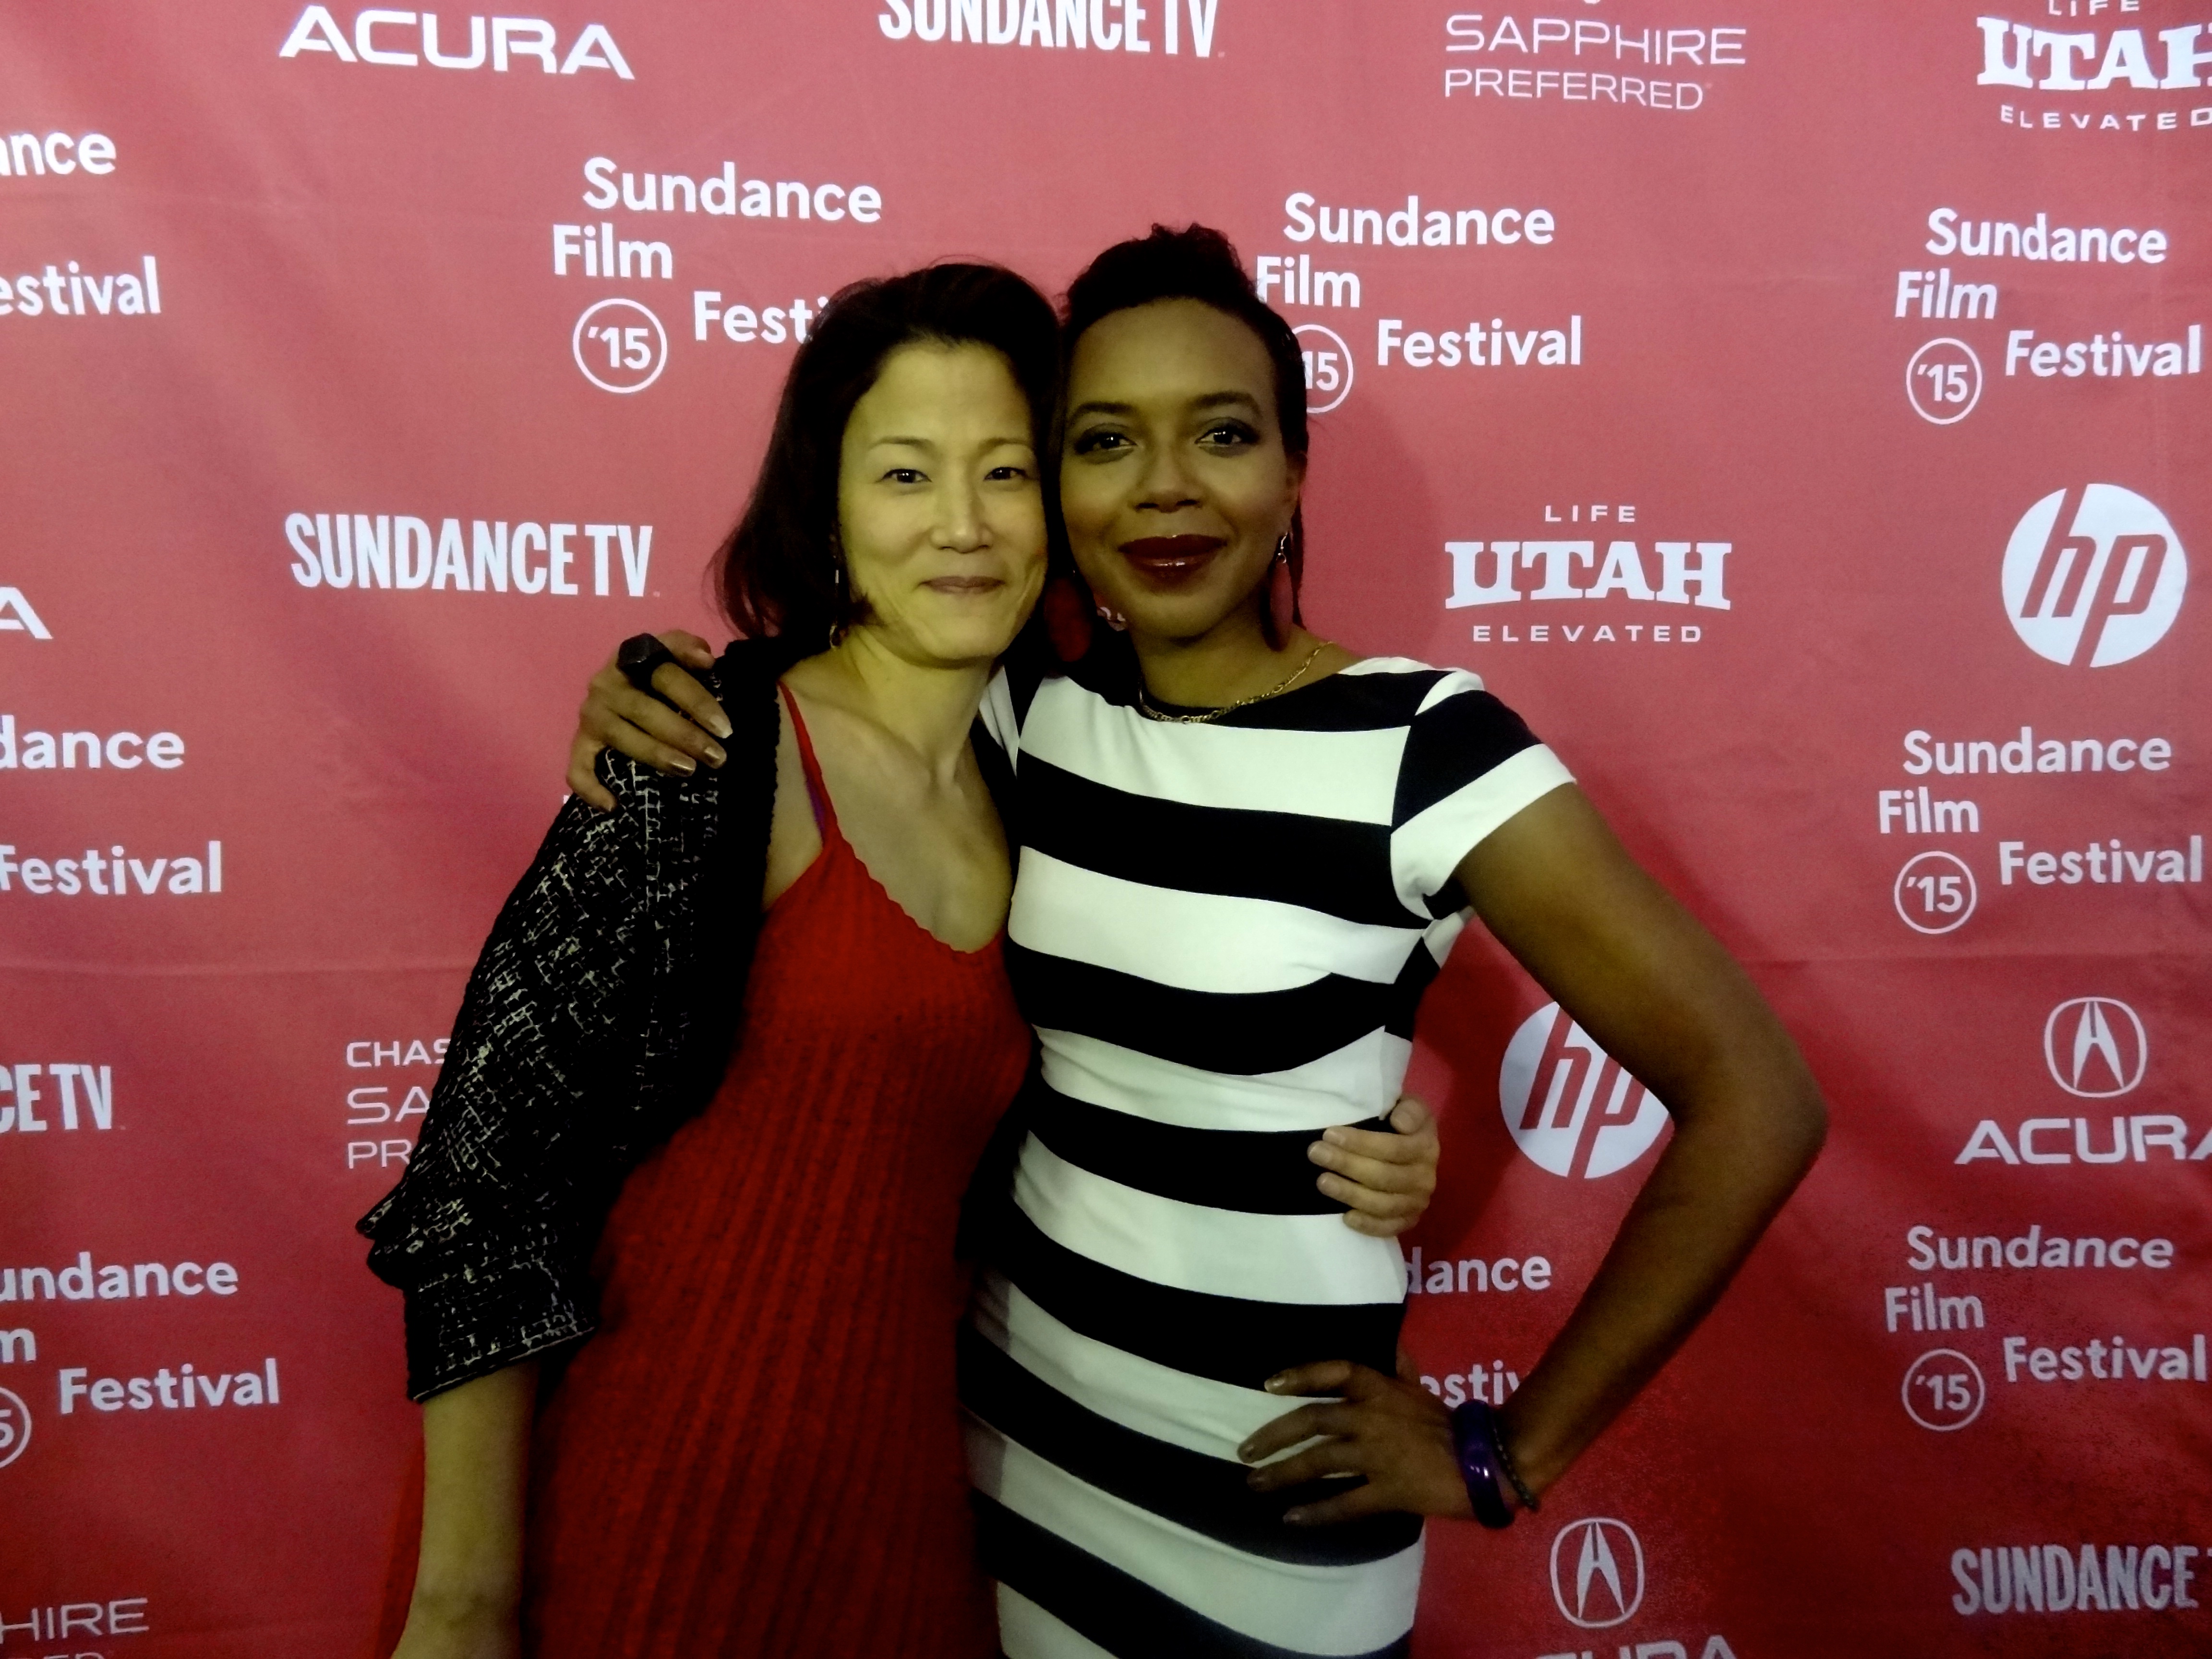 Sundance 2015 - Advantageous World Premiere Sameerah Luqmaan-Harris and Jacqueline Kim